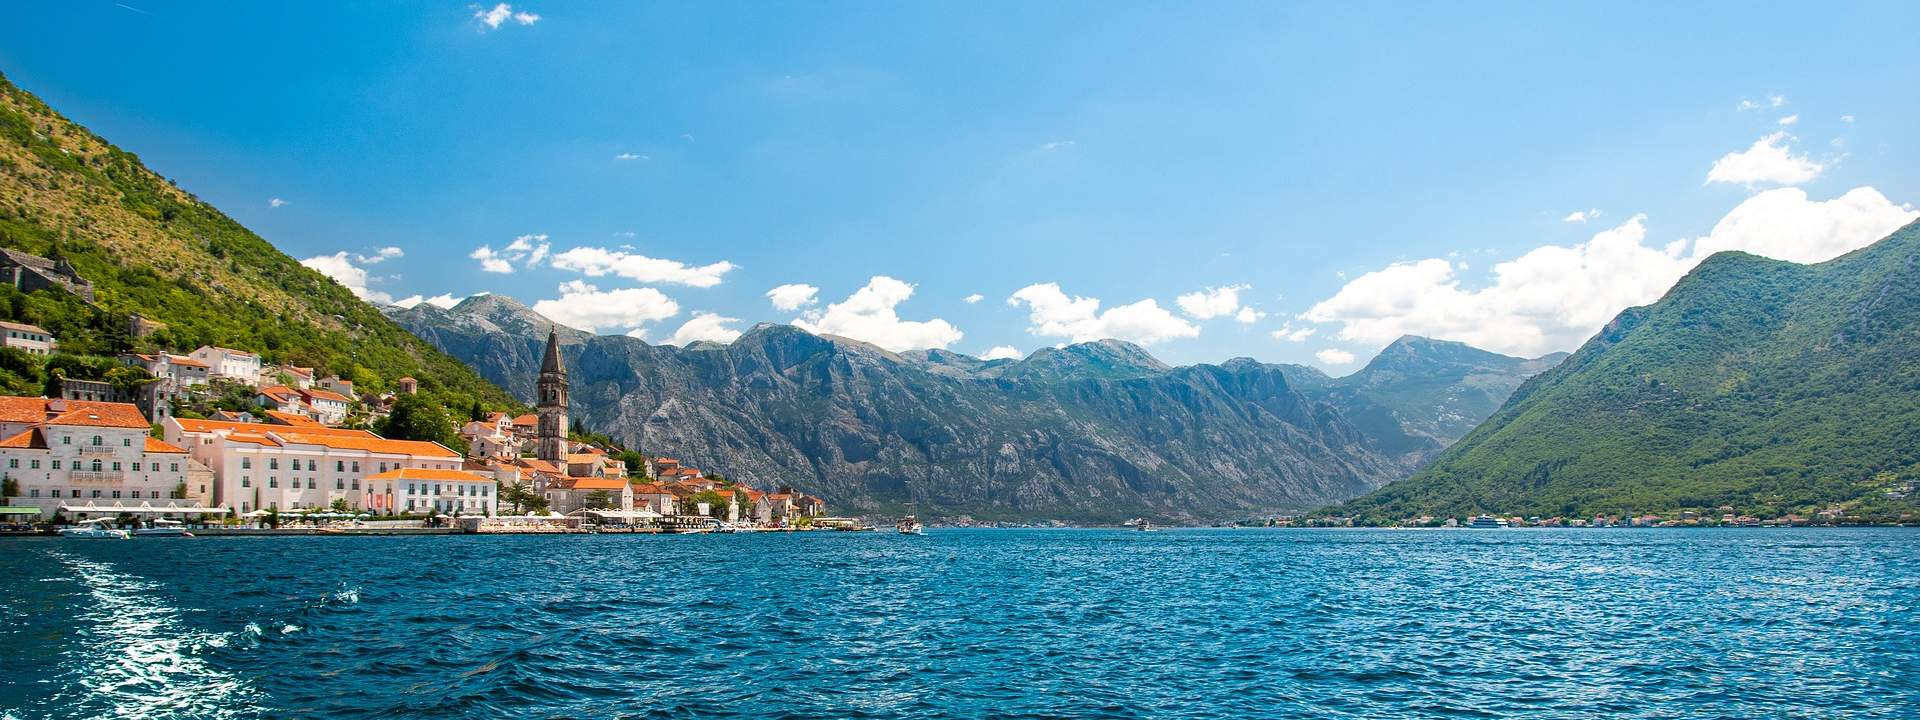 Sail the beautiful Adriatic coastline on a catamaran